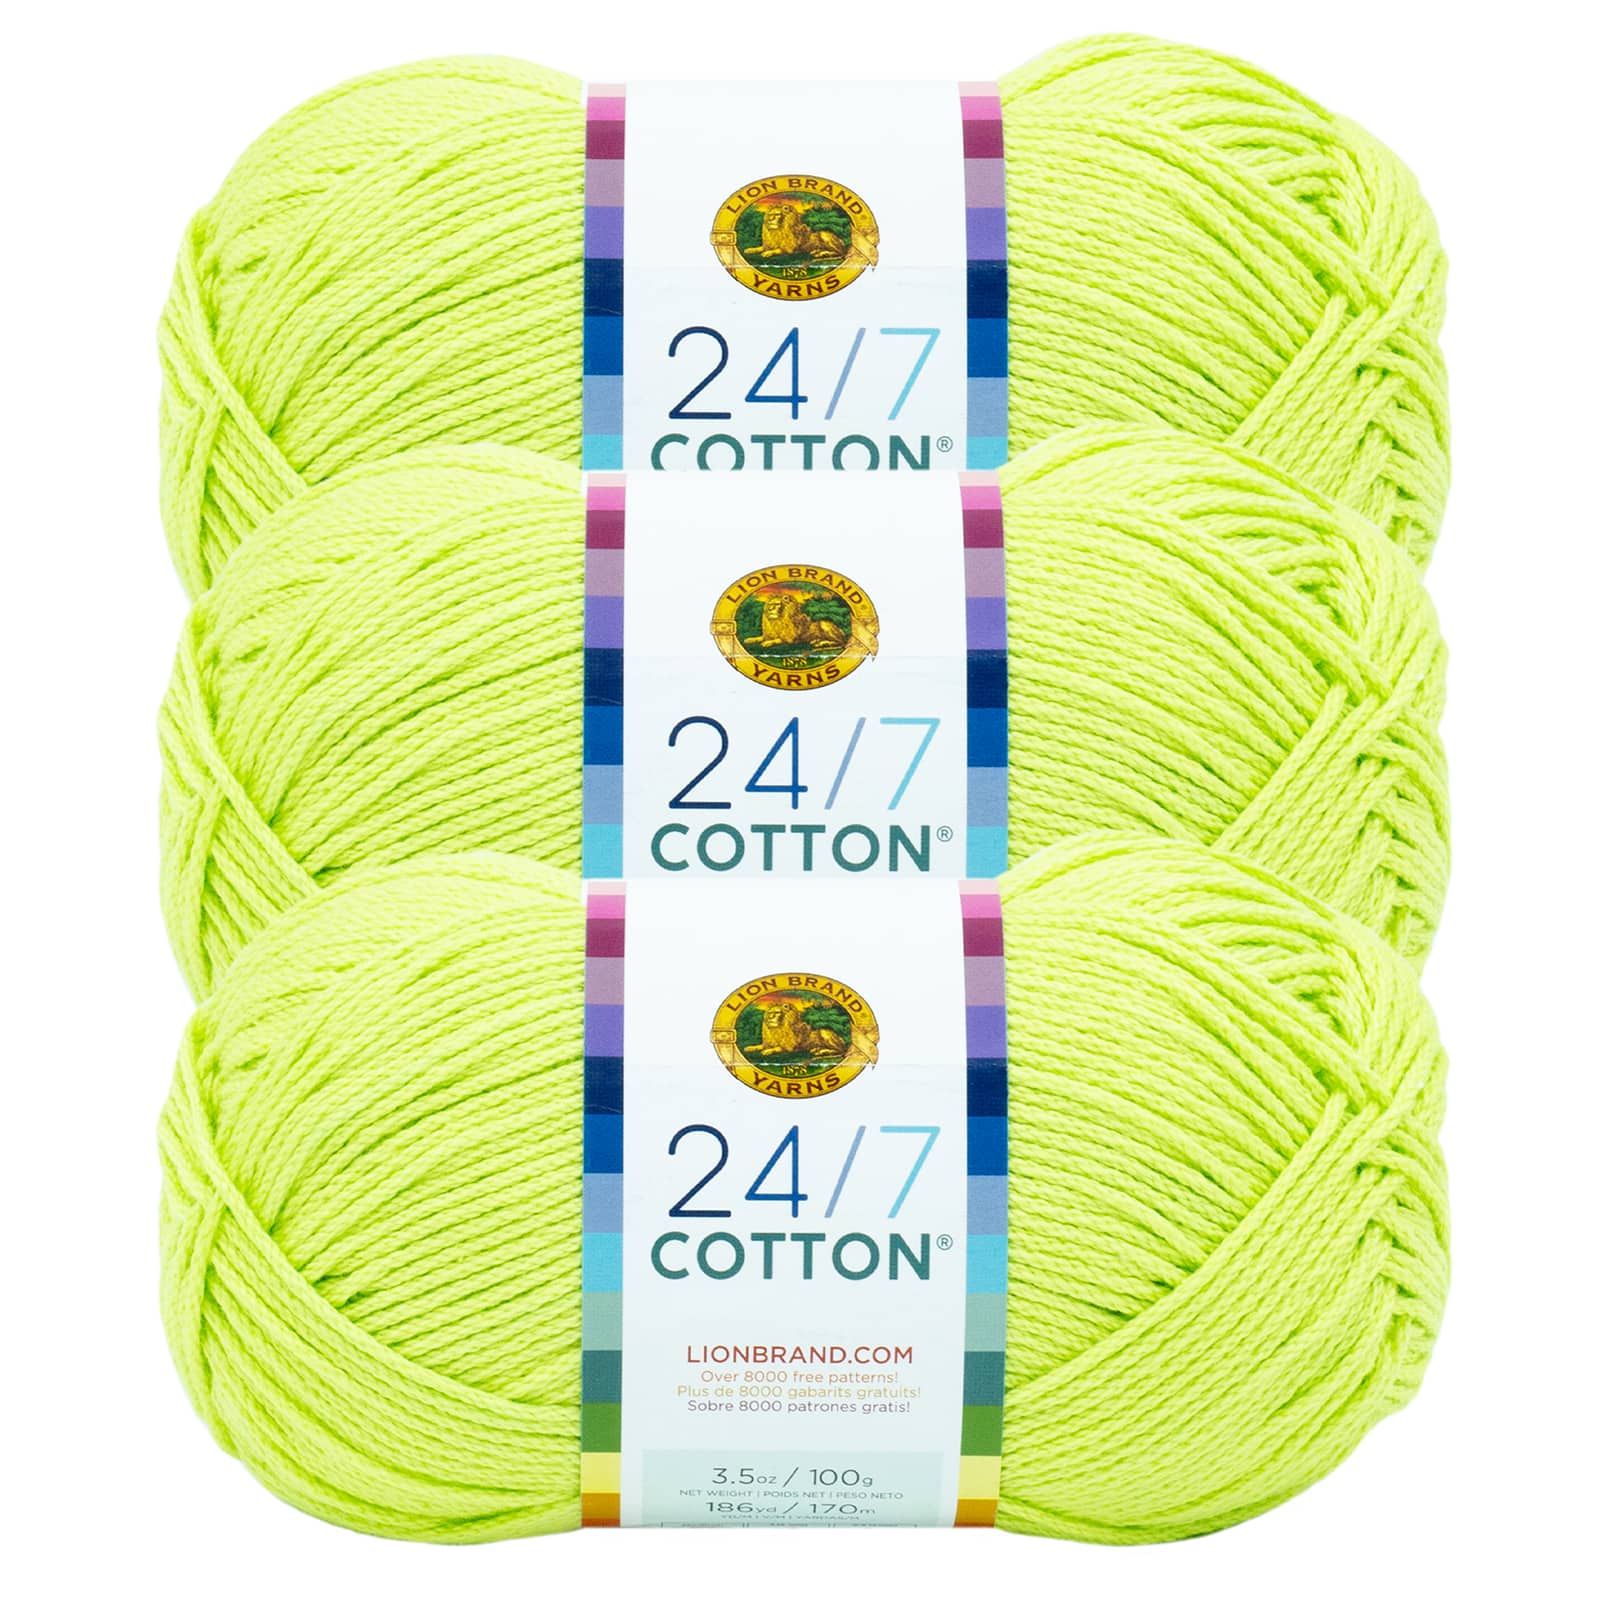 Lion Brand Yarn 24/7 Cotton Lime Mercerized Natural Fiber Medium Cotton Green Yarn 3 Pack, Size: 3.5 oz